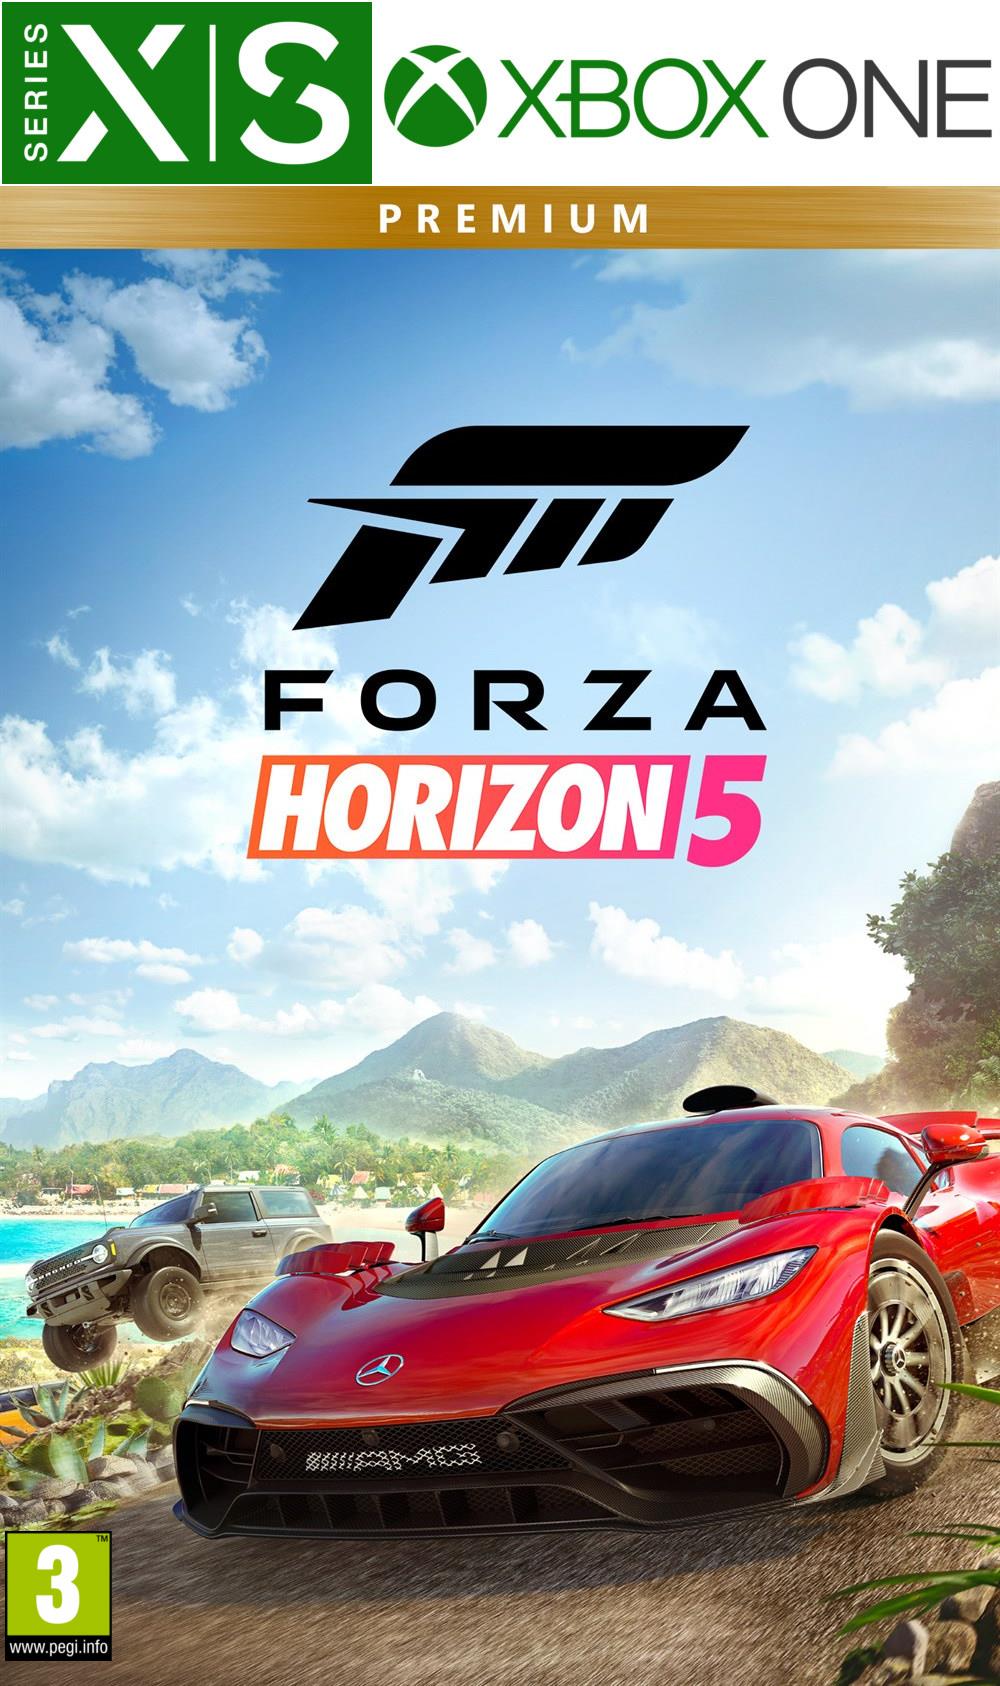 Microsoft Forza Horizon 5 Premium Edition XBox / PC Digital Code DE - G7Q-00126